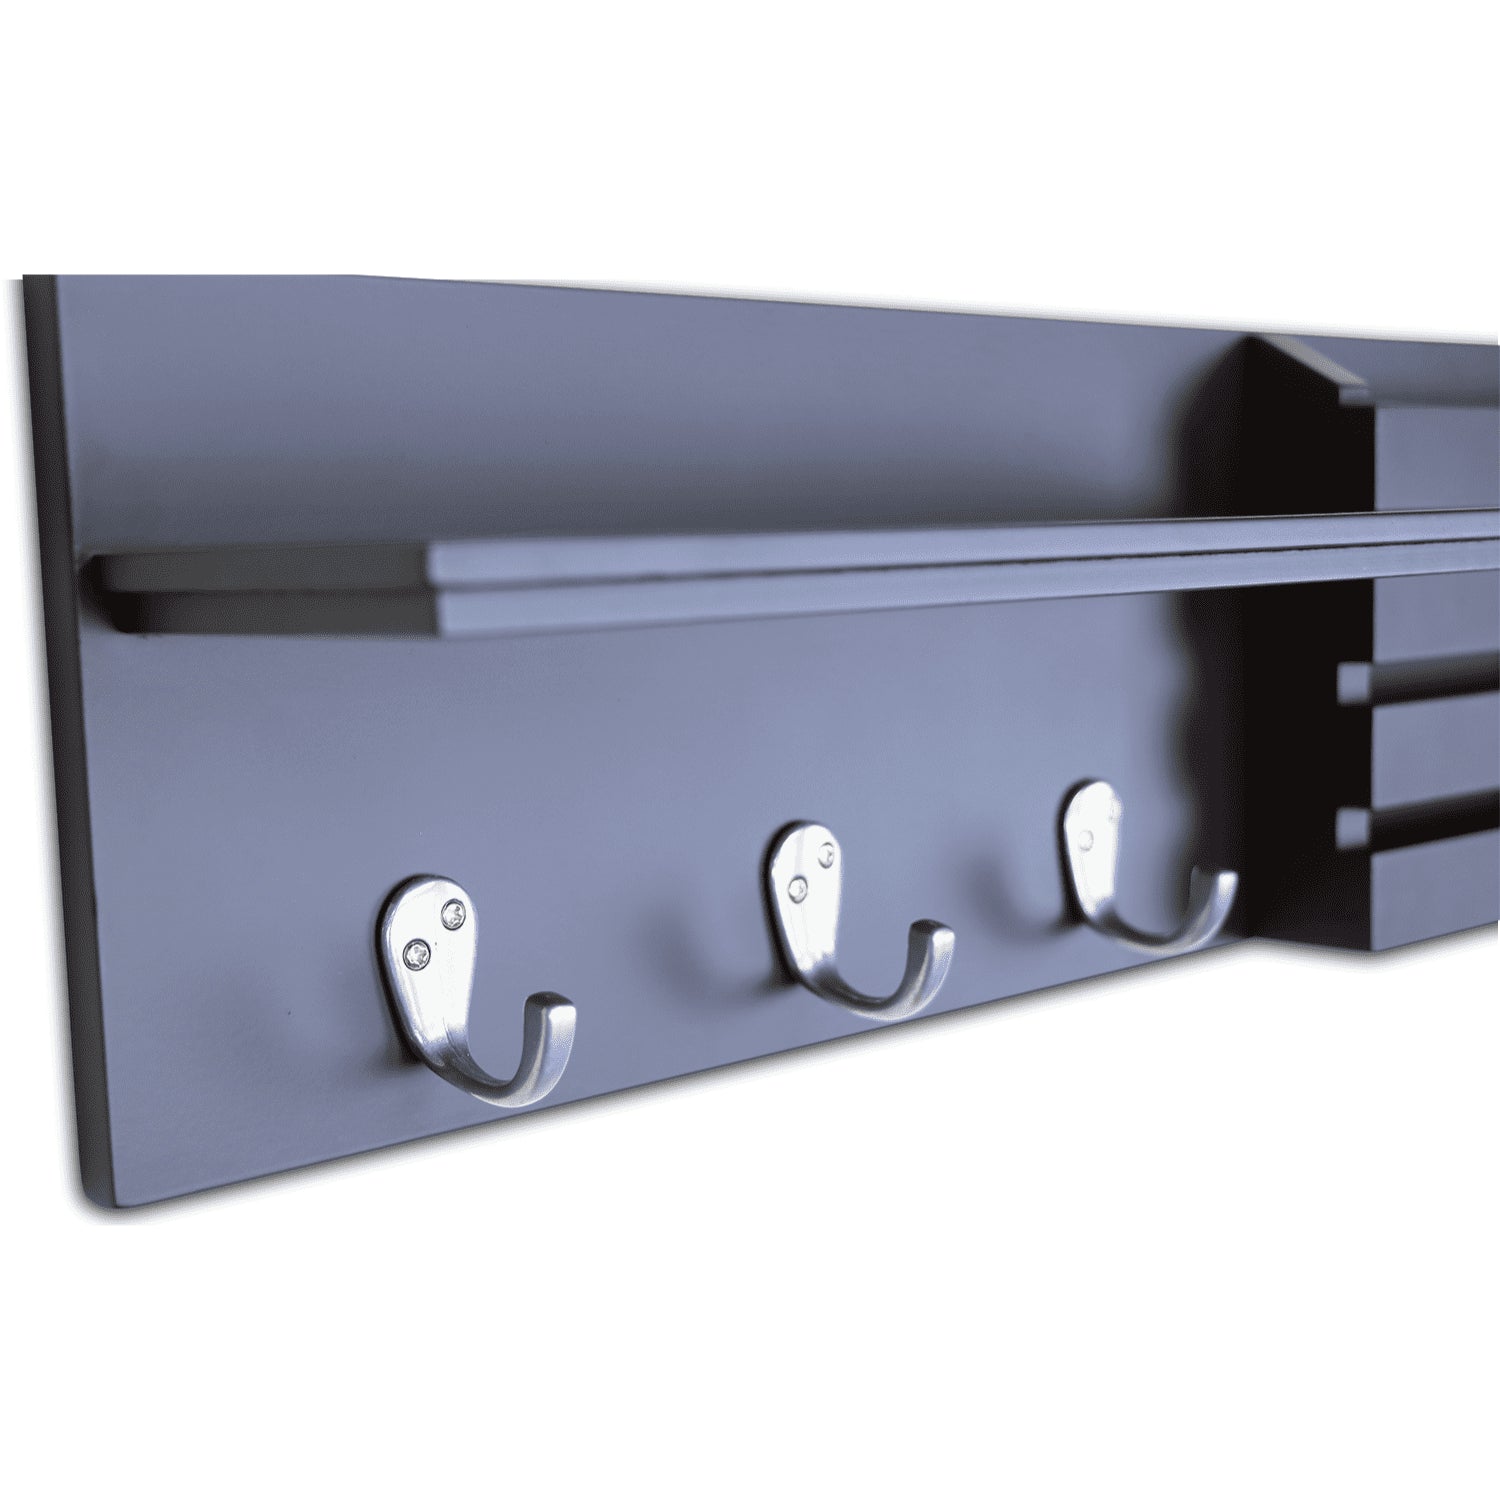 Ballucci Mail Holder and Coat Key Rack, Wood Entryway Wall Shelf Organizer with 3 Hooks, Black